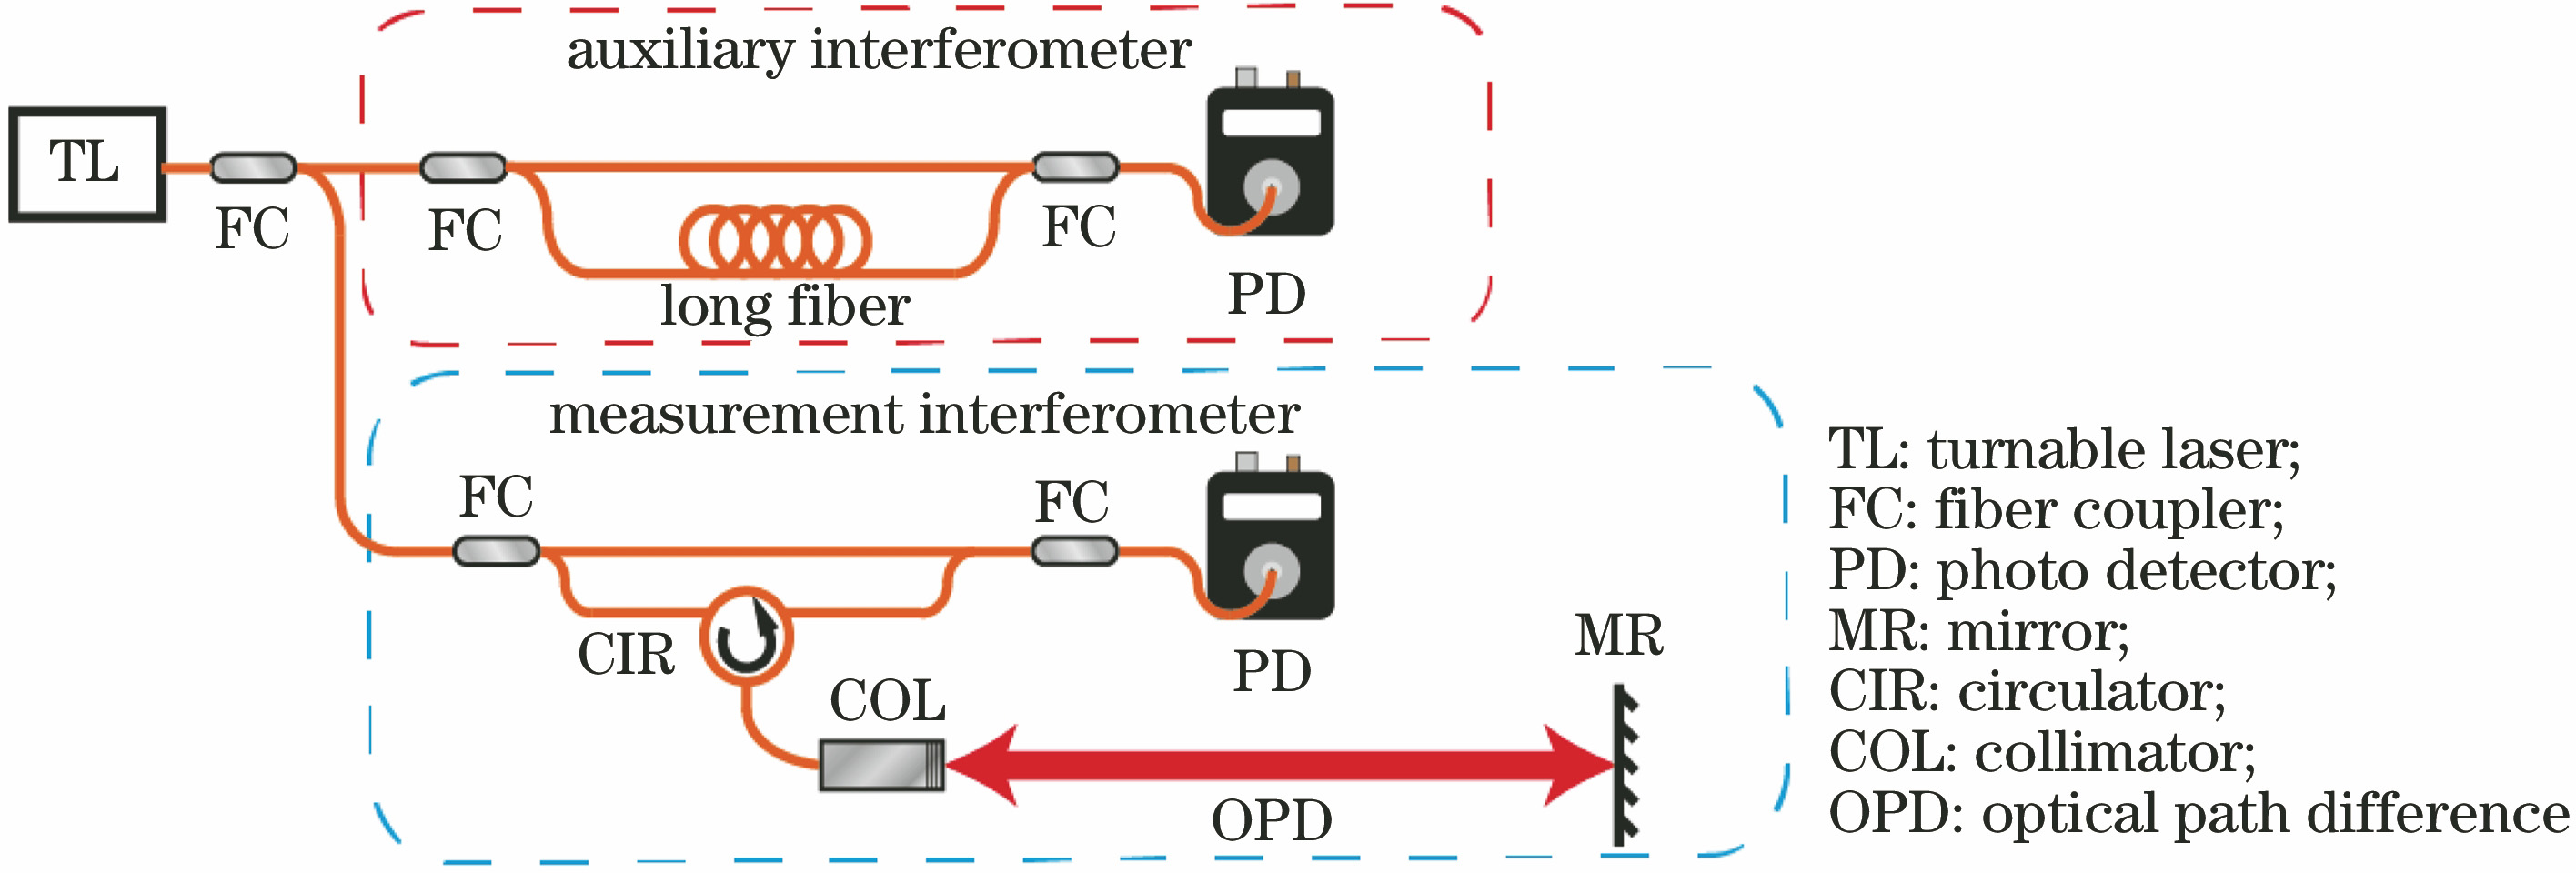 FSI ranging system based on fiber auxiliary interferometer